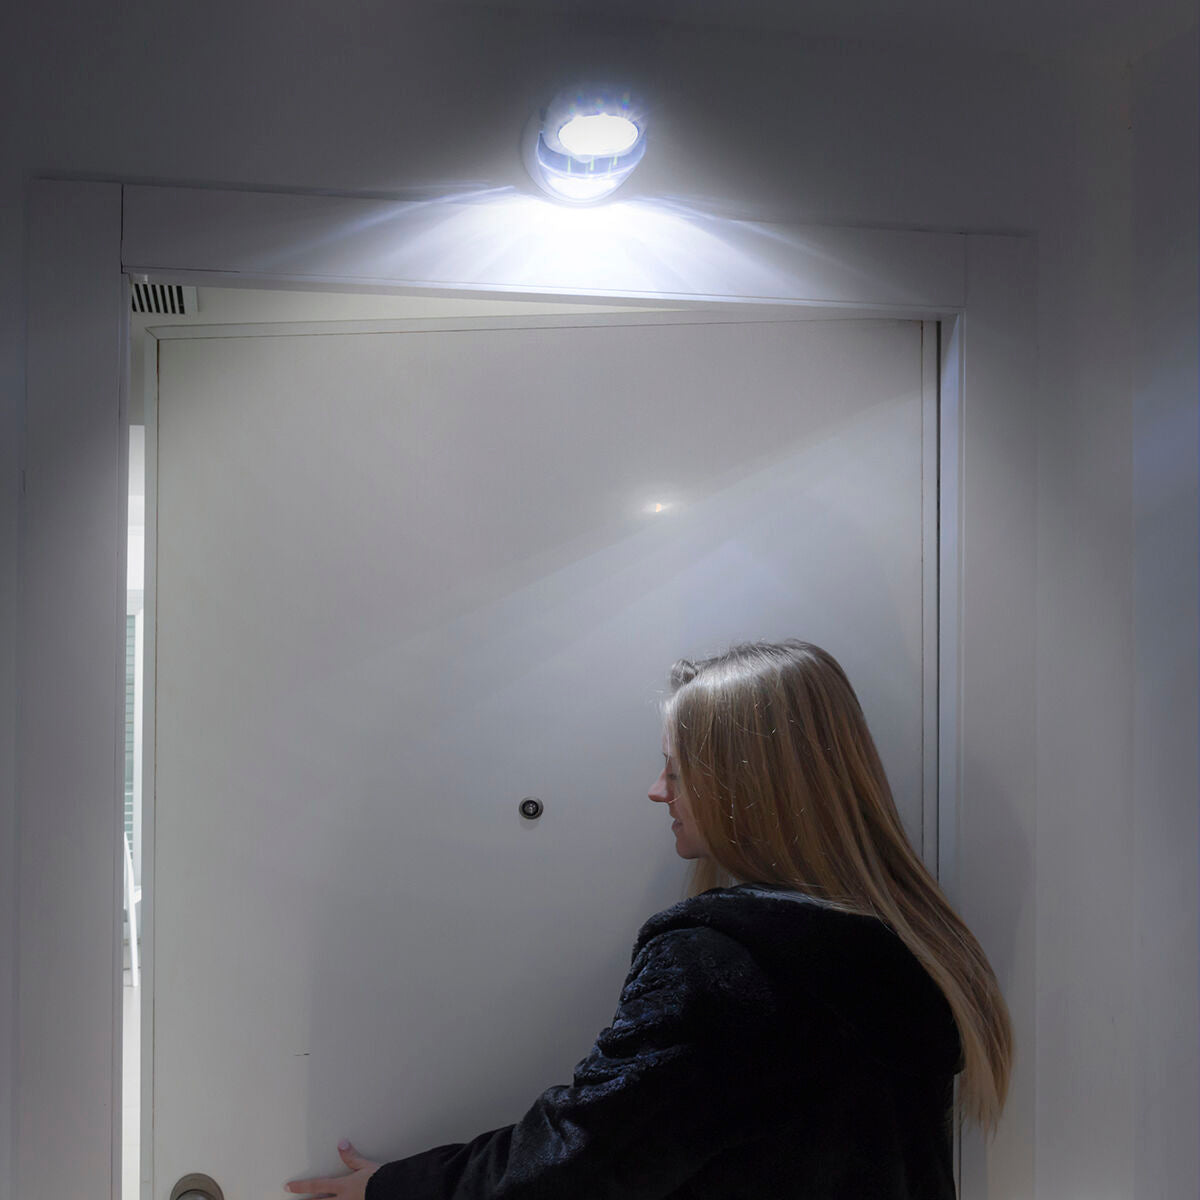 Lámpara LED con Sensor de Movimiento InnovaGoods